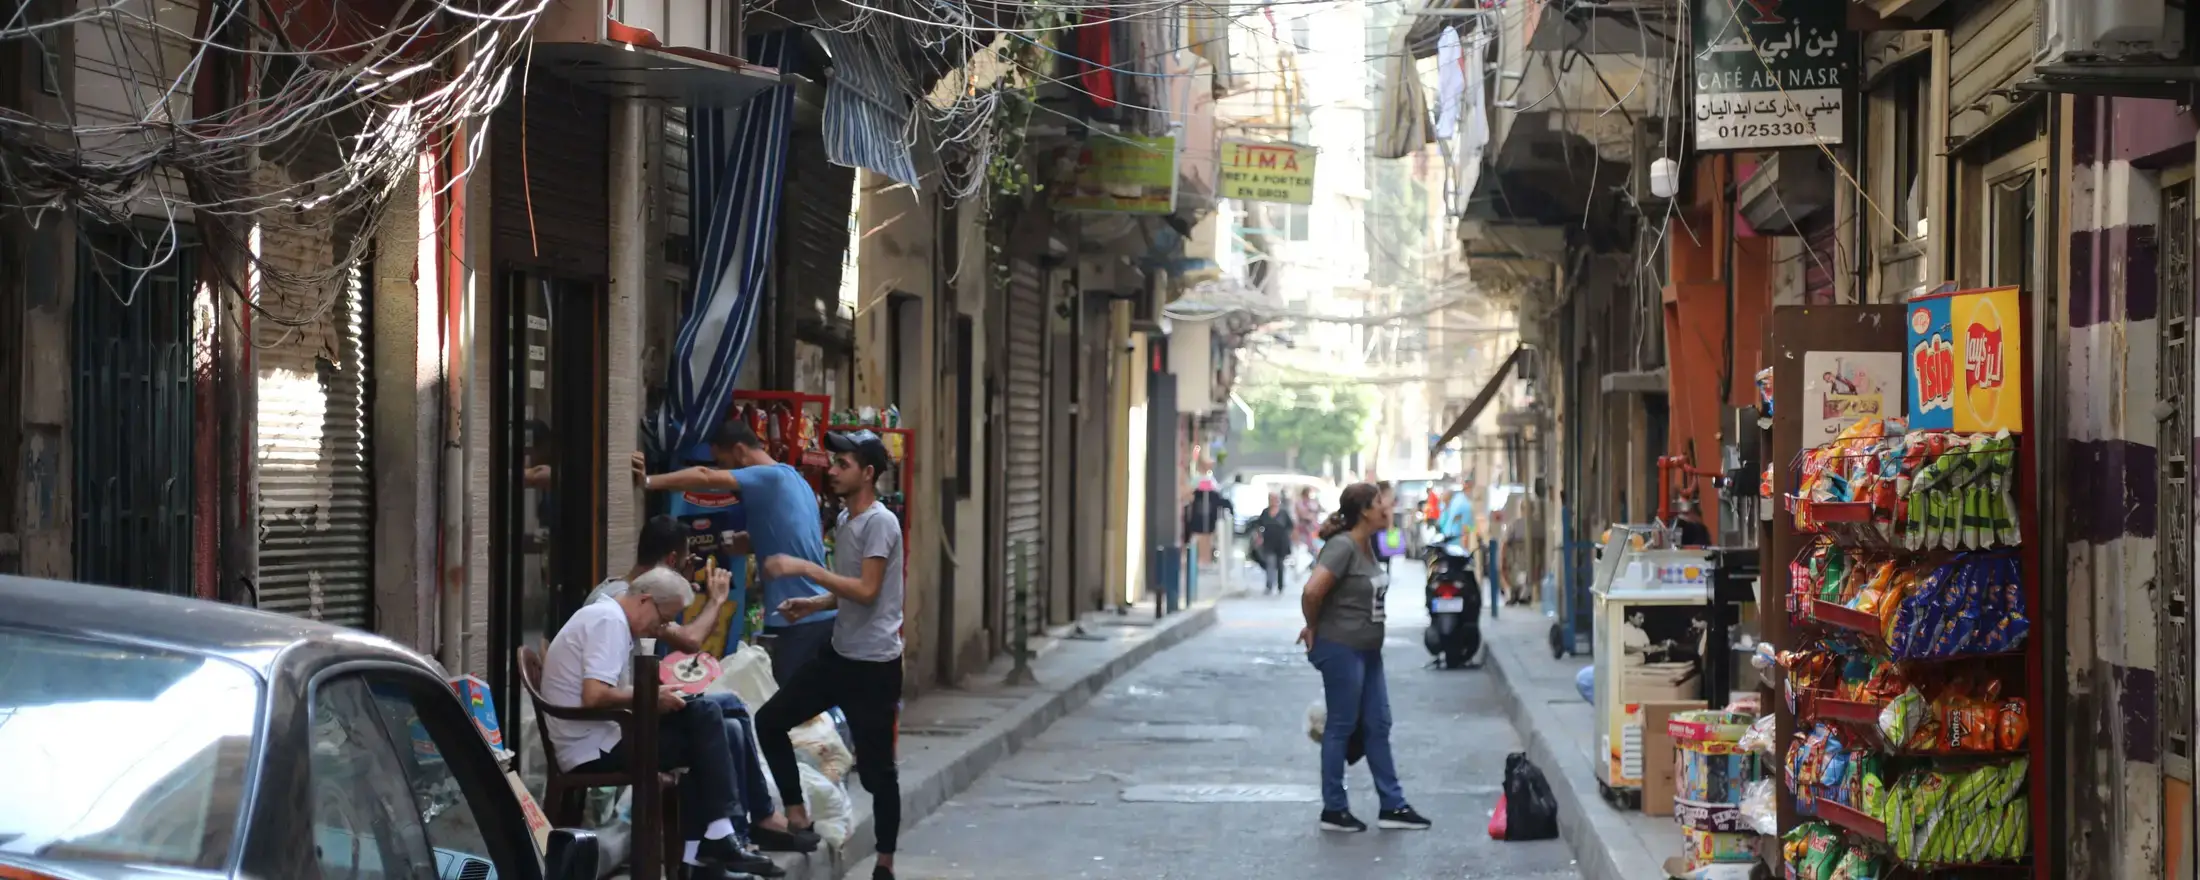 Urban October in Beirut: improving life through urban interventions